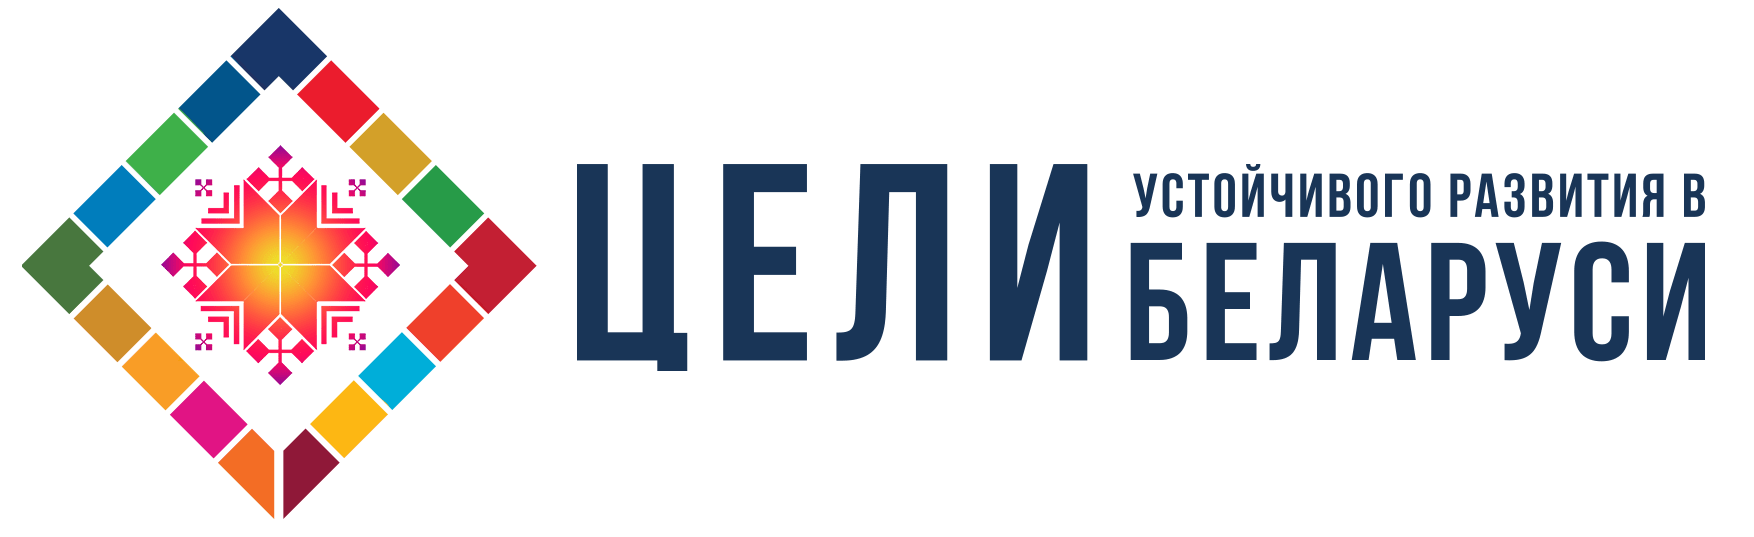 Цели устойчивого развития Беларуси